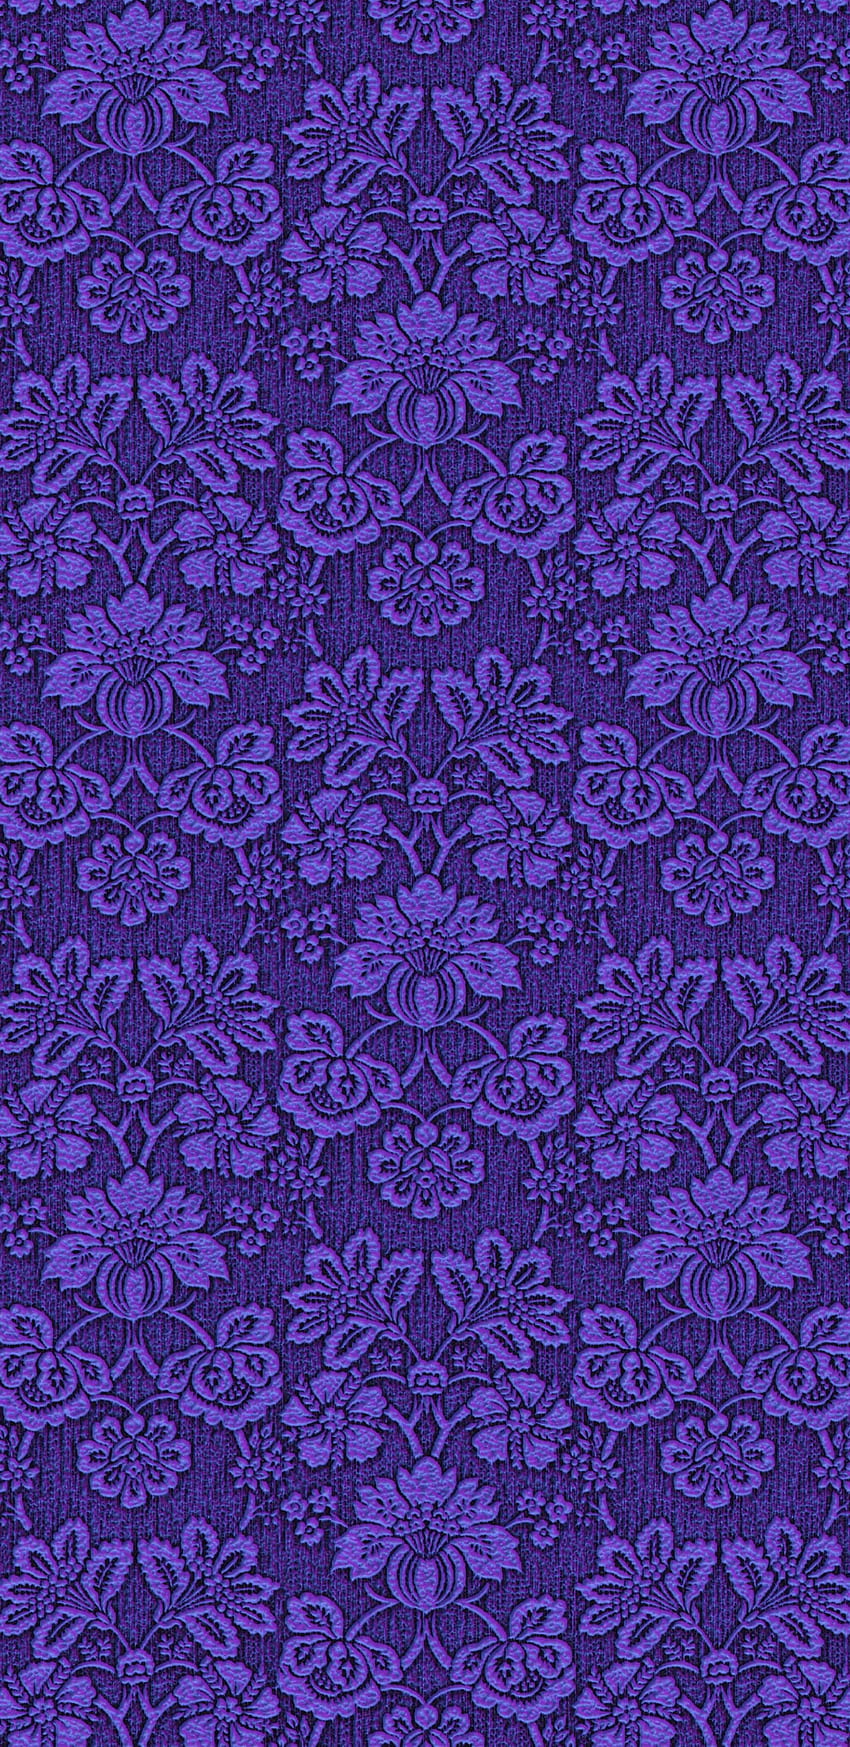 Motivos florales, tela, textura violeta, Samsung Galaxy S8, Samsung Galaxy S8 Plus, textura violeta fondo de pantalla del teléfono